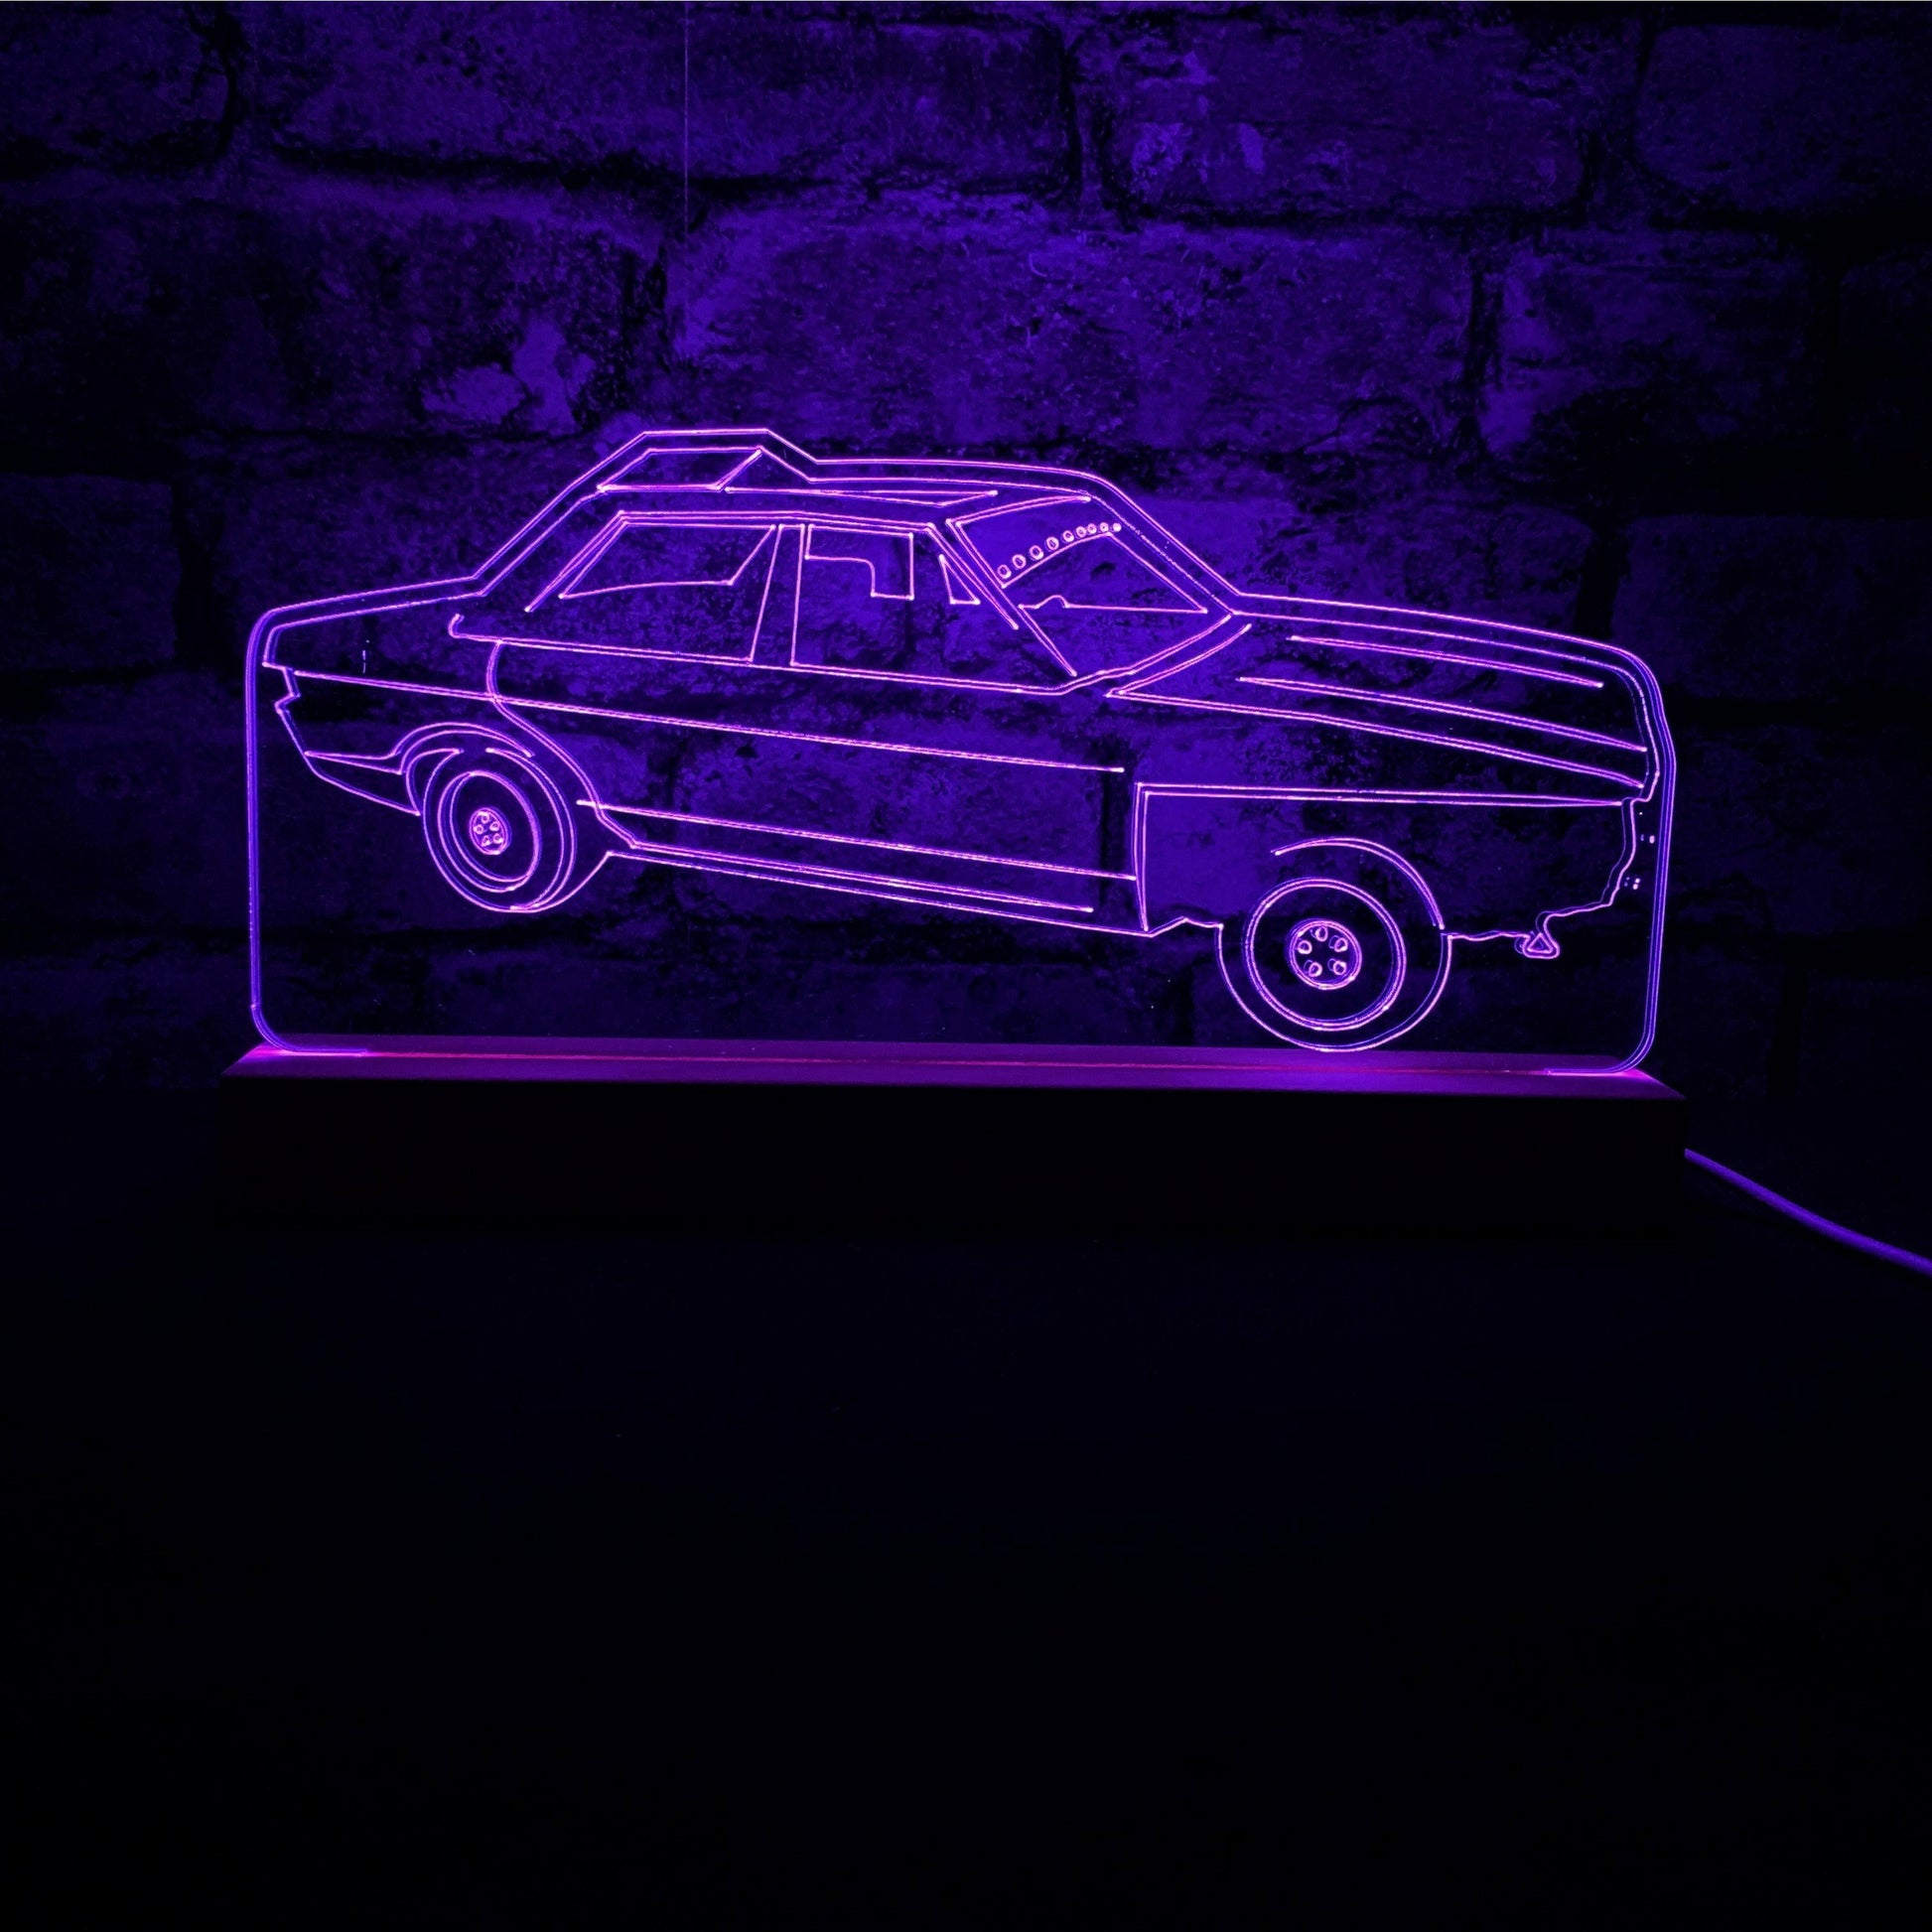 Granada - Banger Night Light - Large Wooden Base - Night Light - Stock Car & Banger Toy Tracks